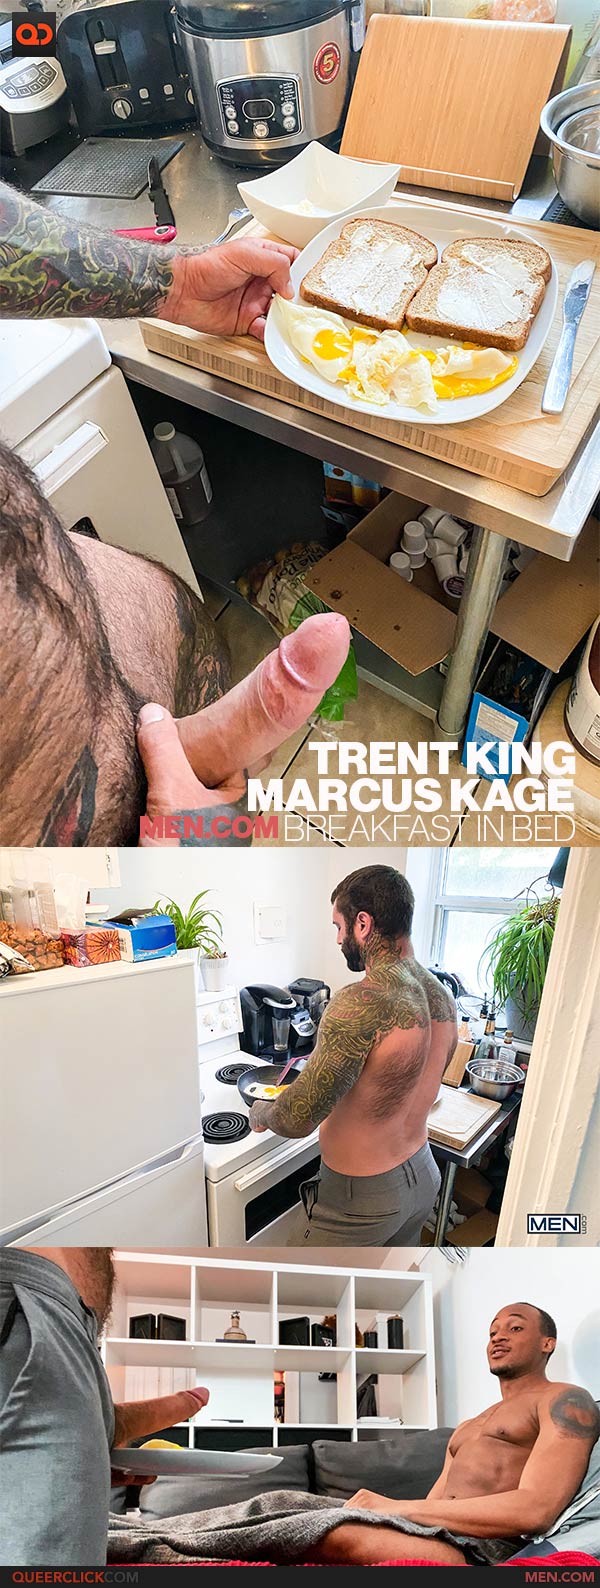 Men.com: Trent King and Markus Kage